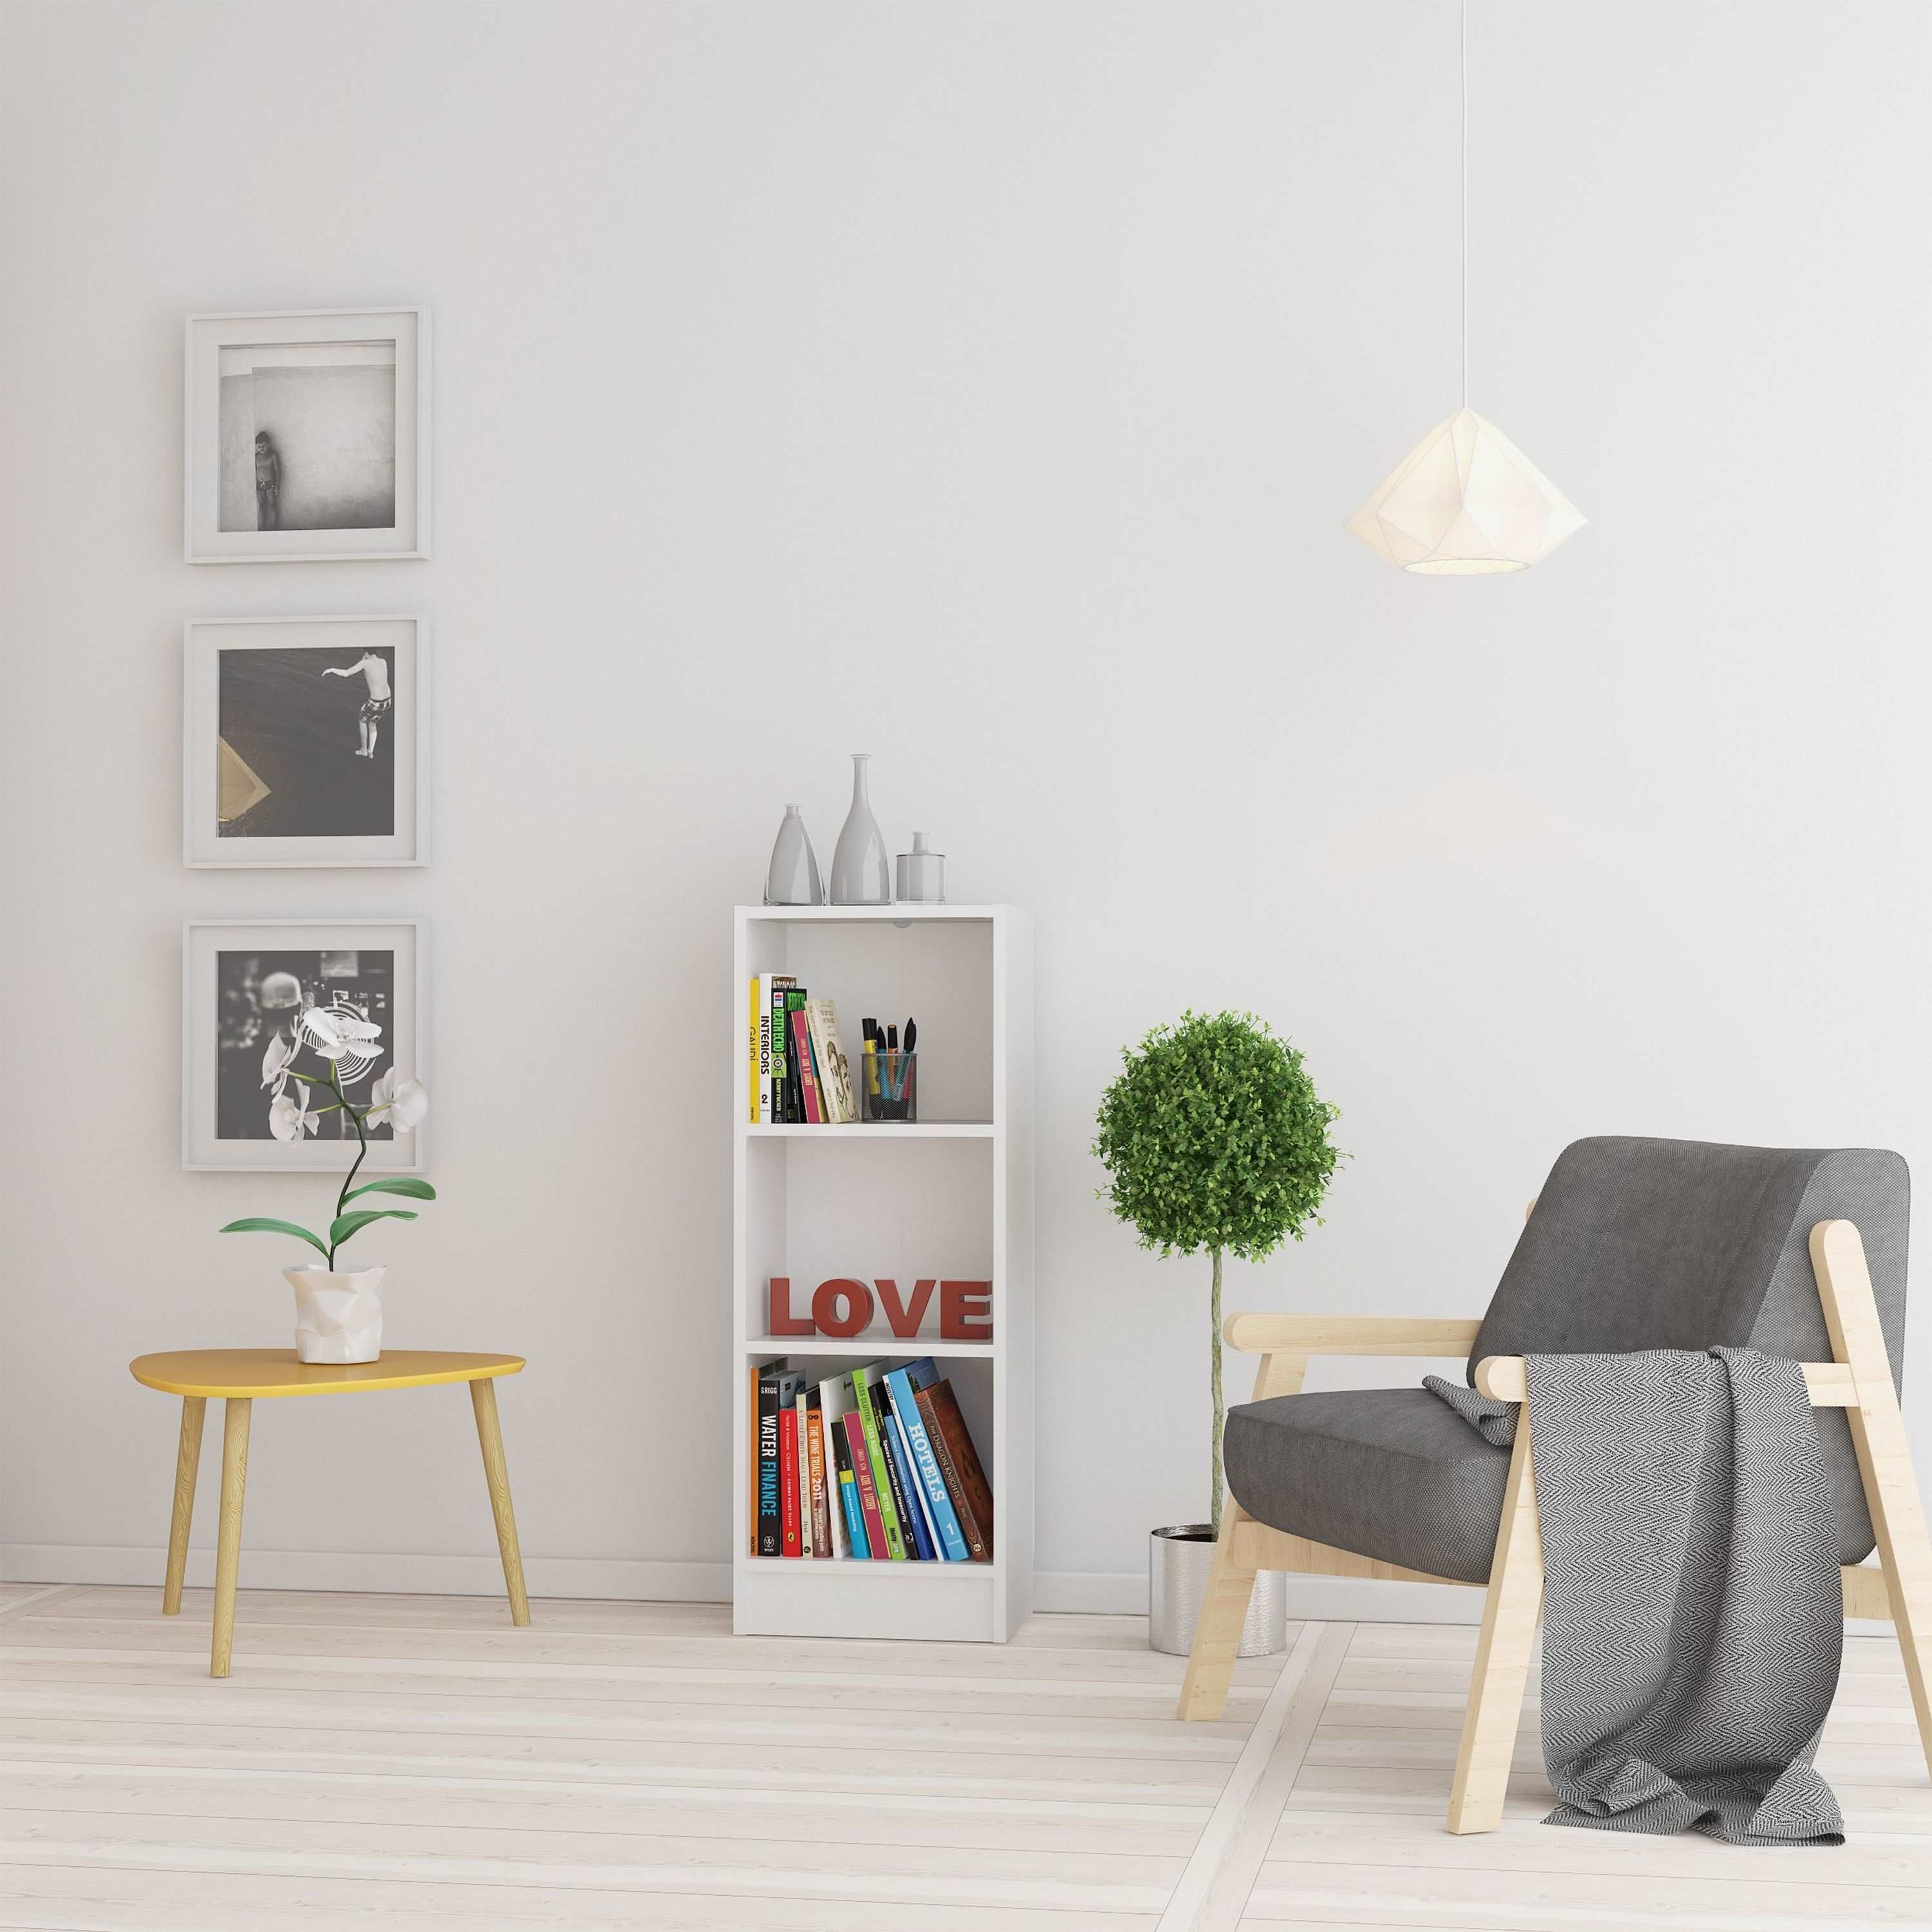 Basic Low Narrow Bookcase (2 Shelves) in White Furniture To Go Ltd